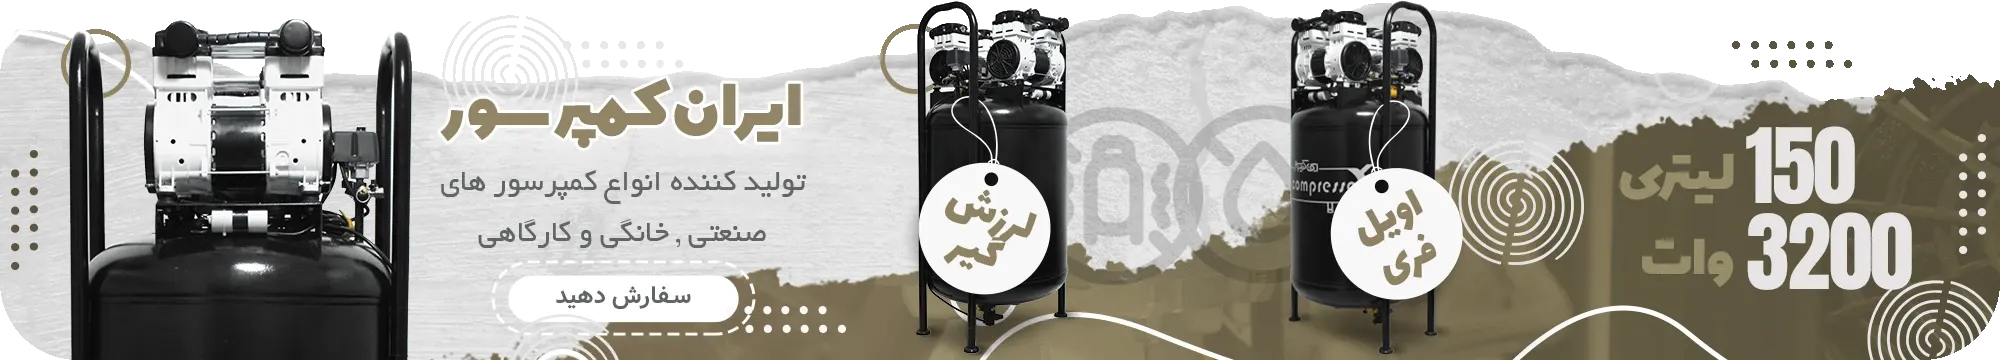 پمپ باد 150 لیتری با 2 موتور سایلنت ایران کمپرسور